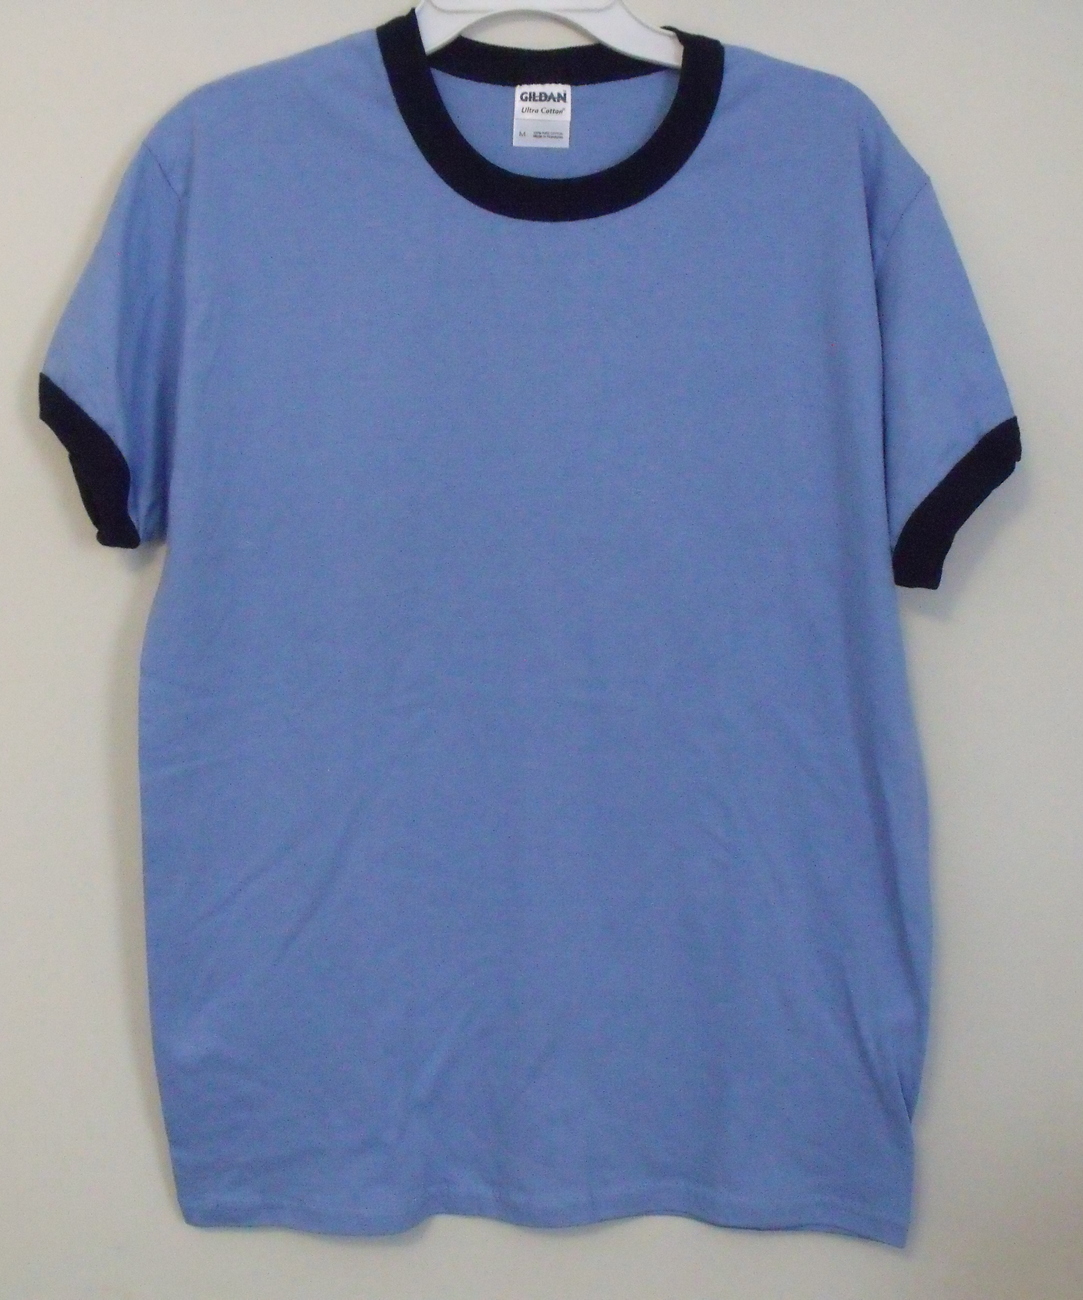 Primary image for Mens Gildan NWOT Blue Navy Blue Short Sleeve T Shirt Size Medium